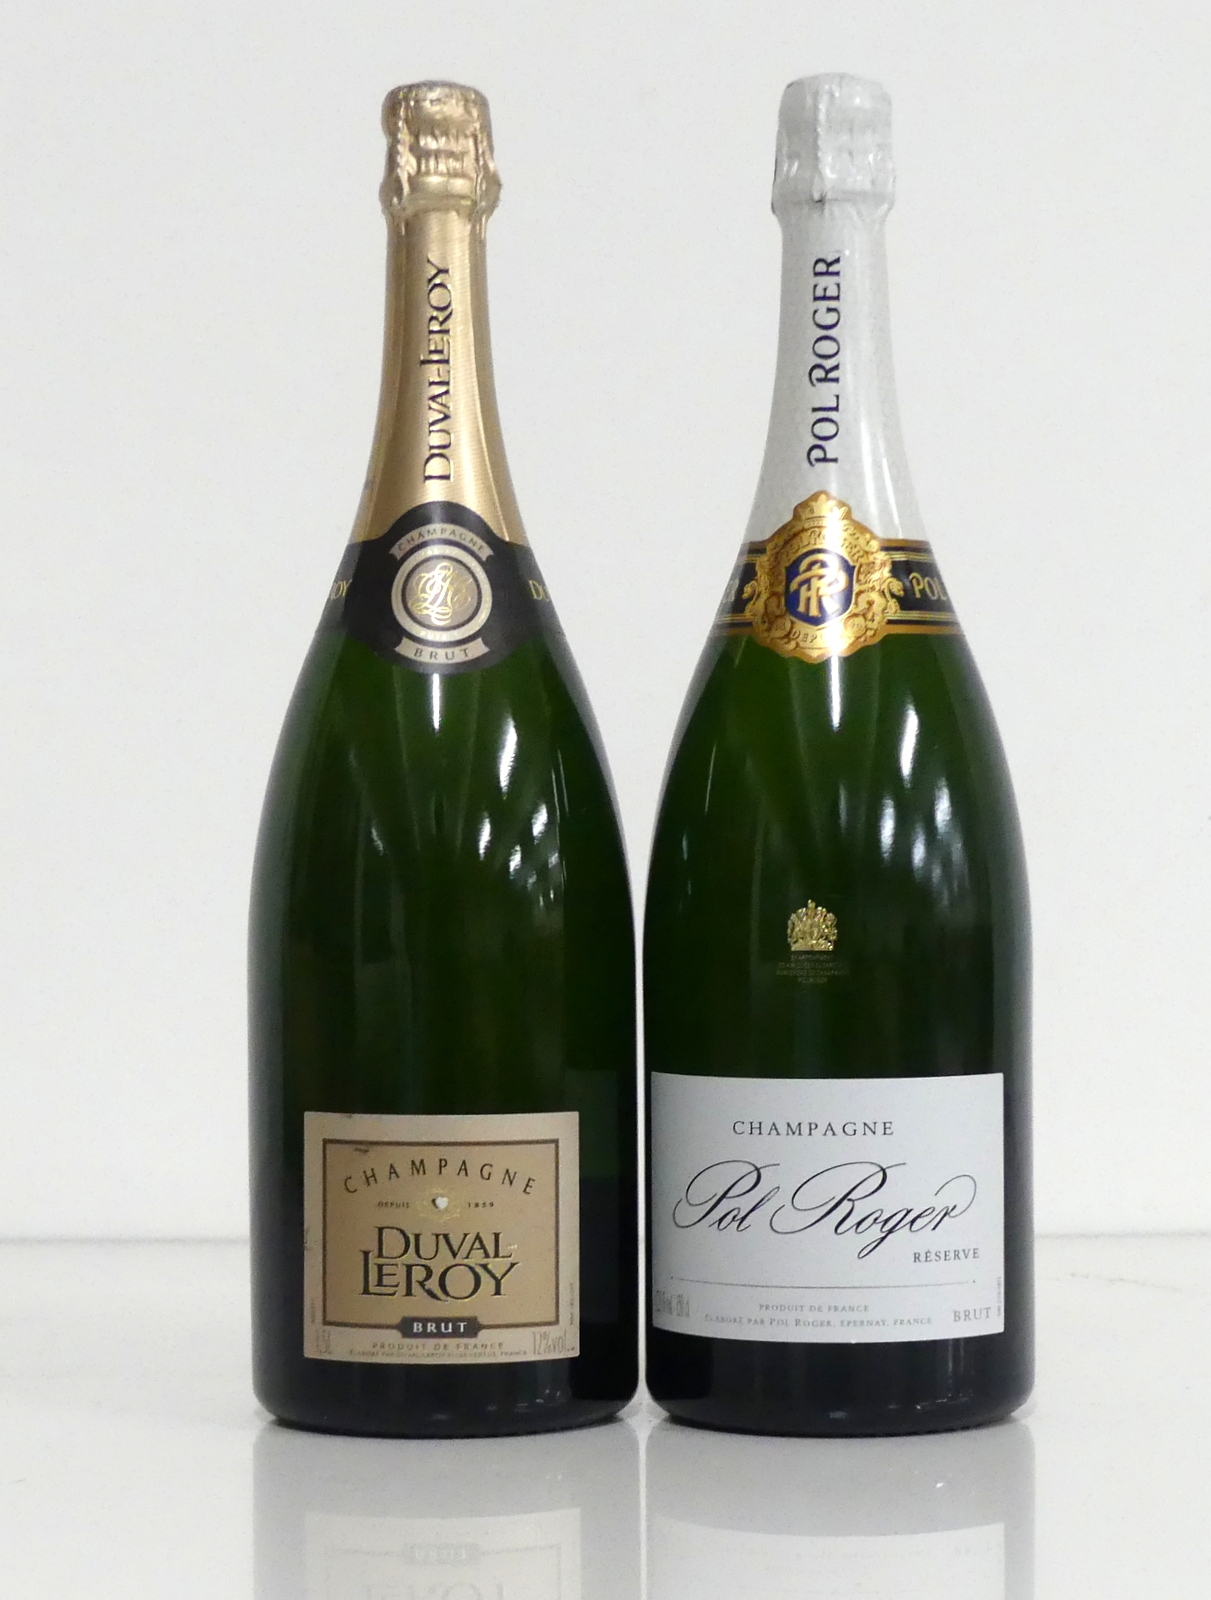 Pol Roger Réserve Magnum  Buy Champagne Online – The Magnum Company.